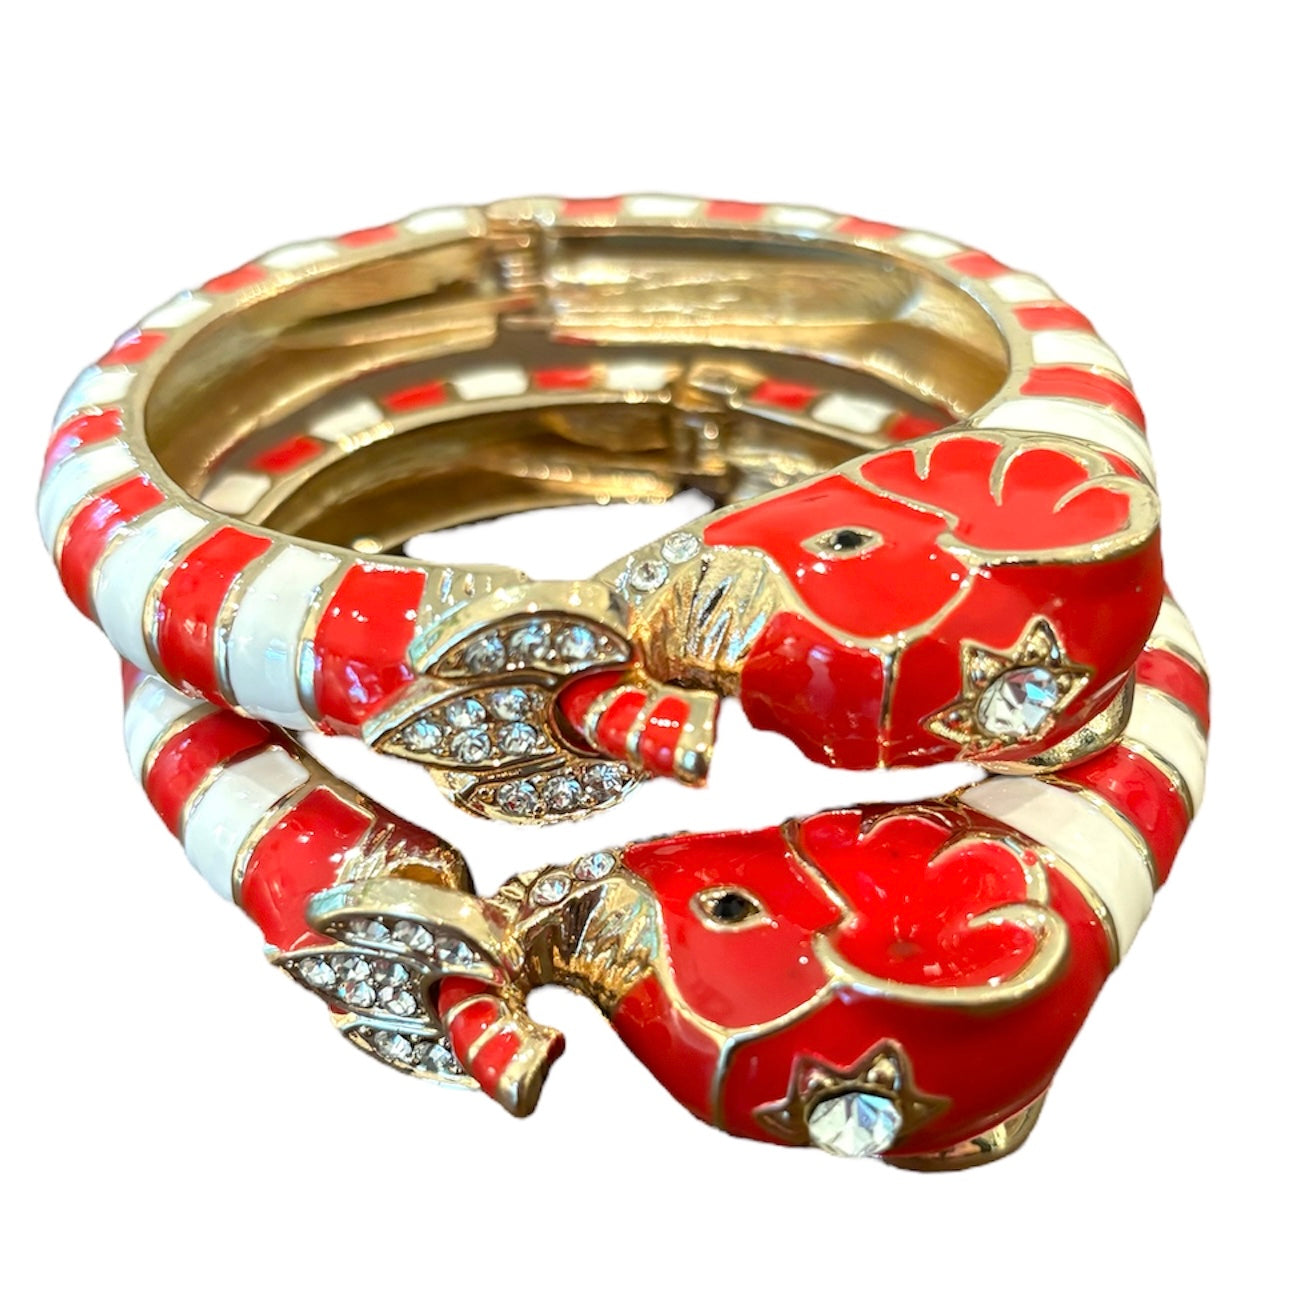 Elephant Hinged Bracelet in Red/White